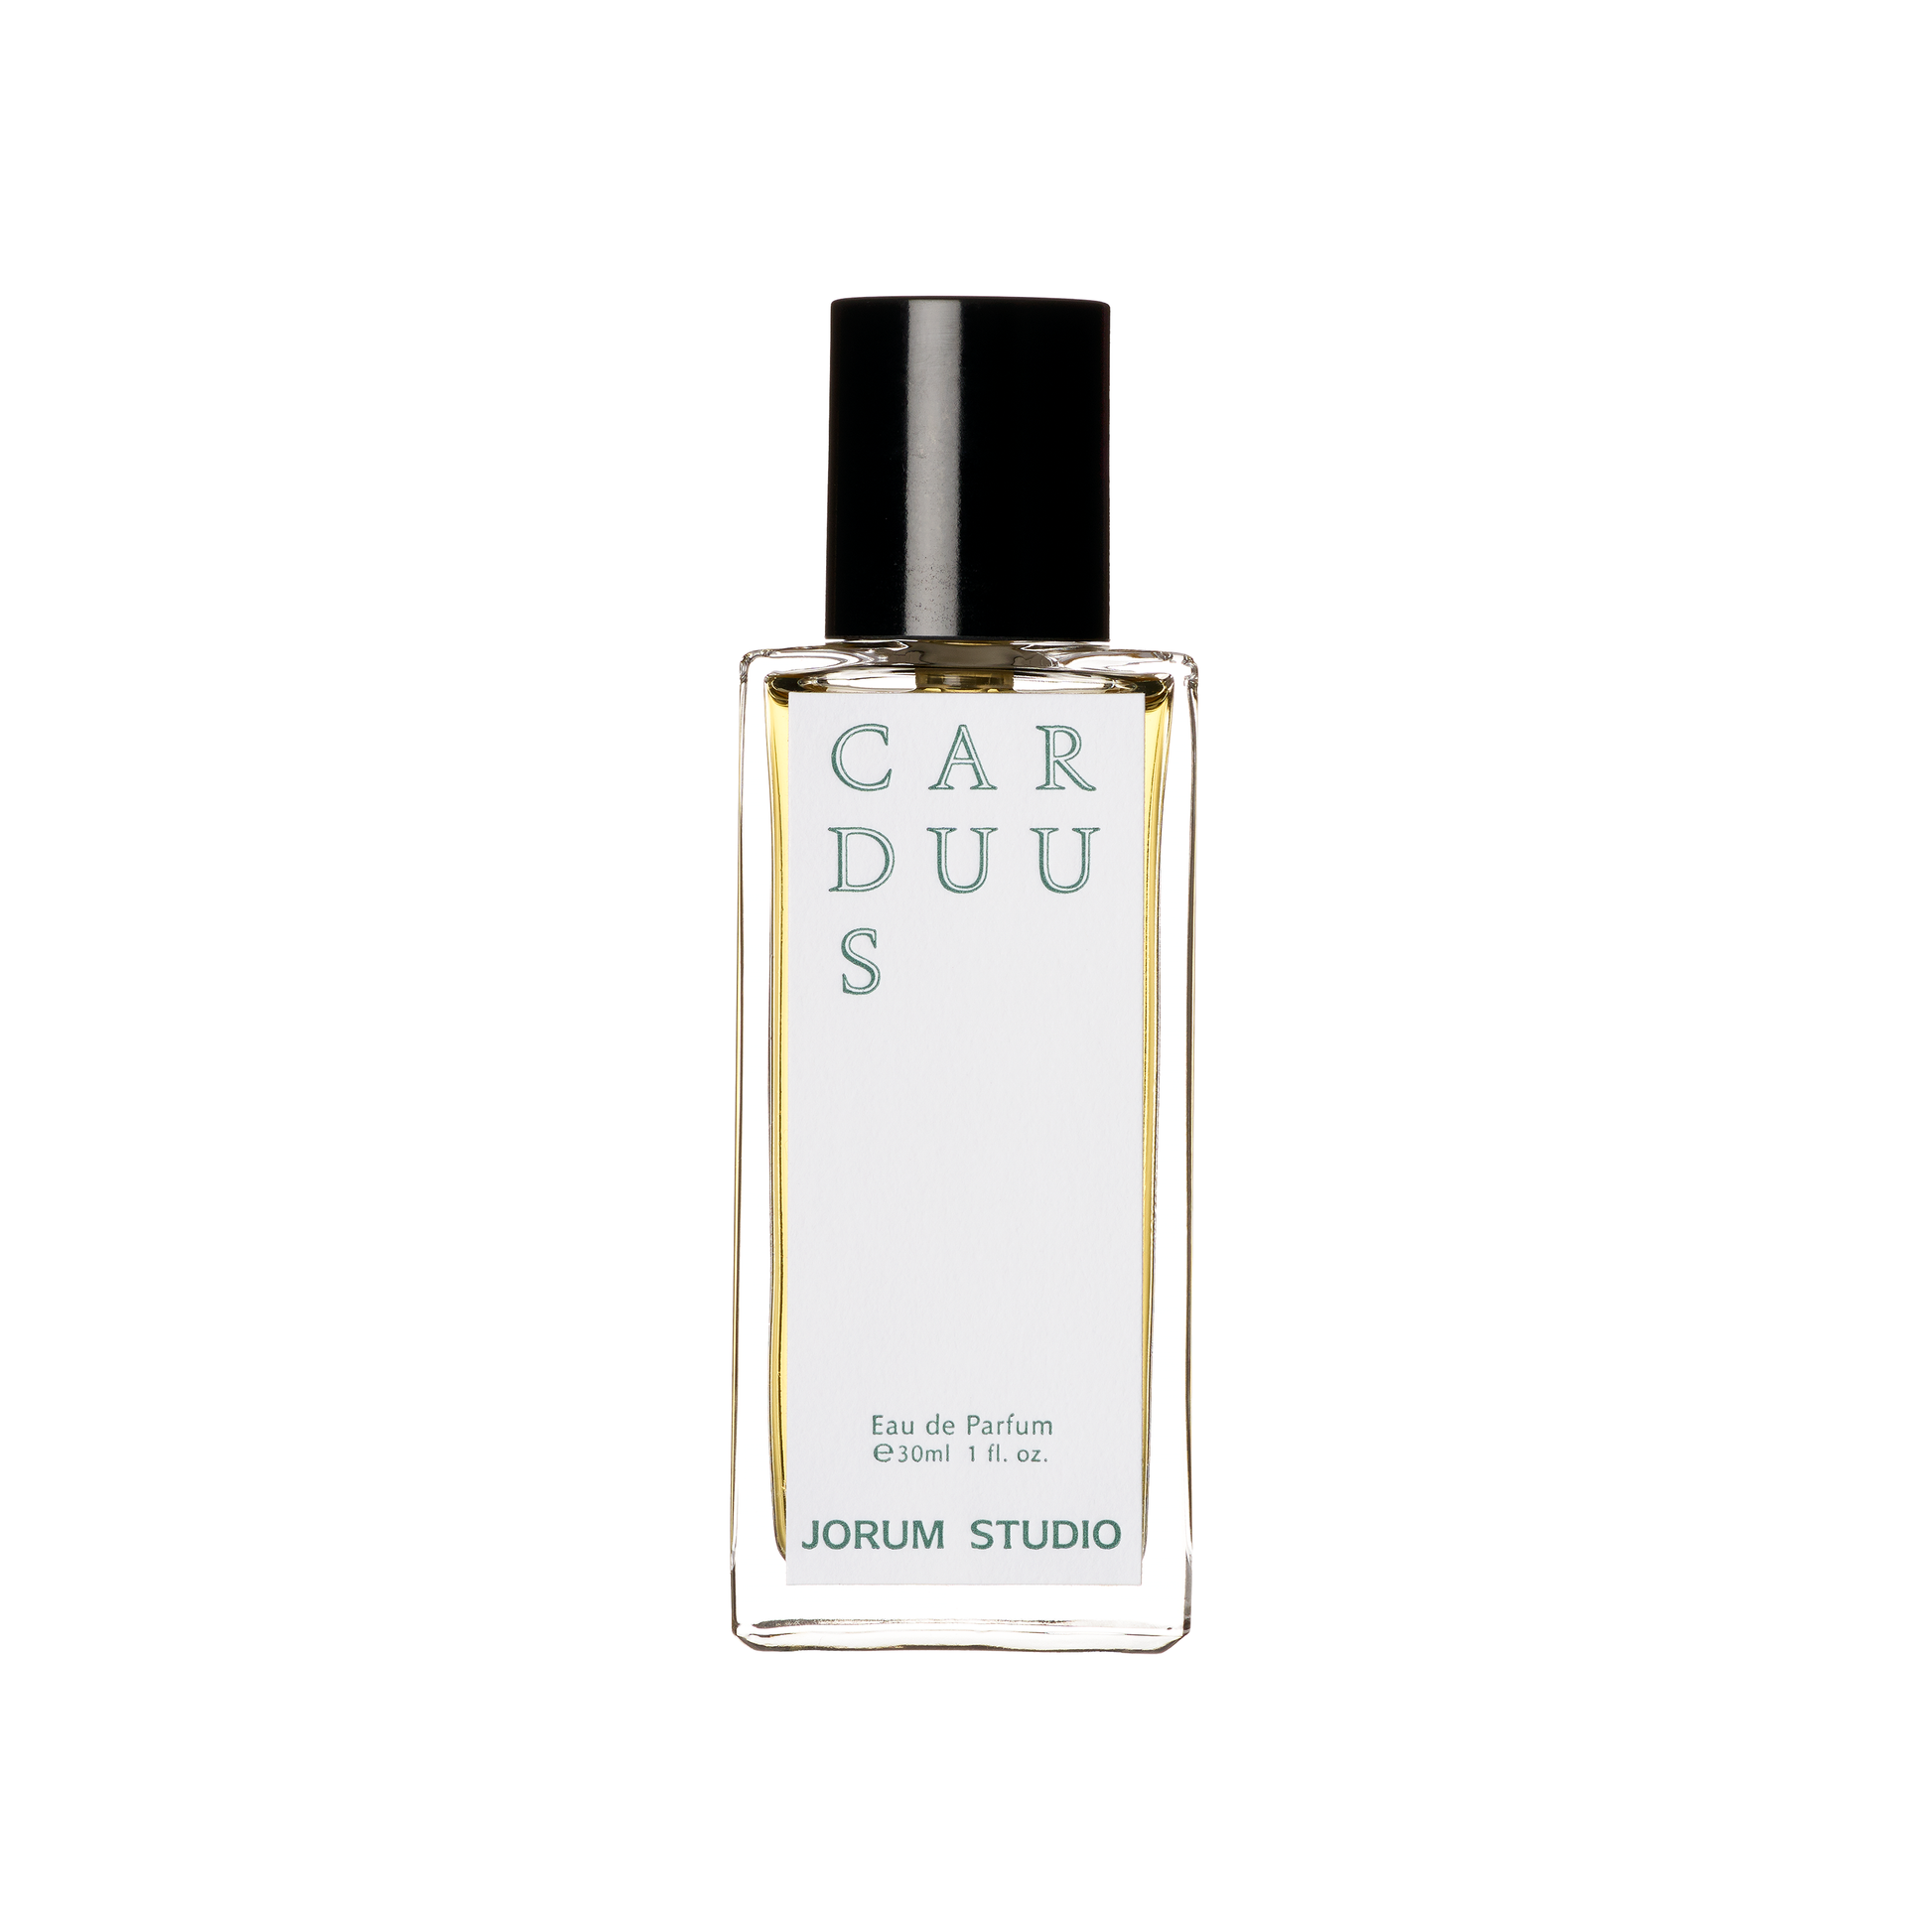 30ml bottle of Carduus Eau de Parfum by independent Scottish perfumers Jorum Studio